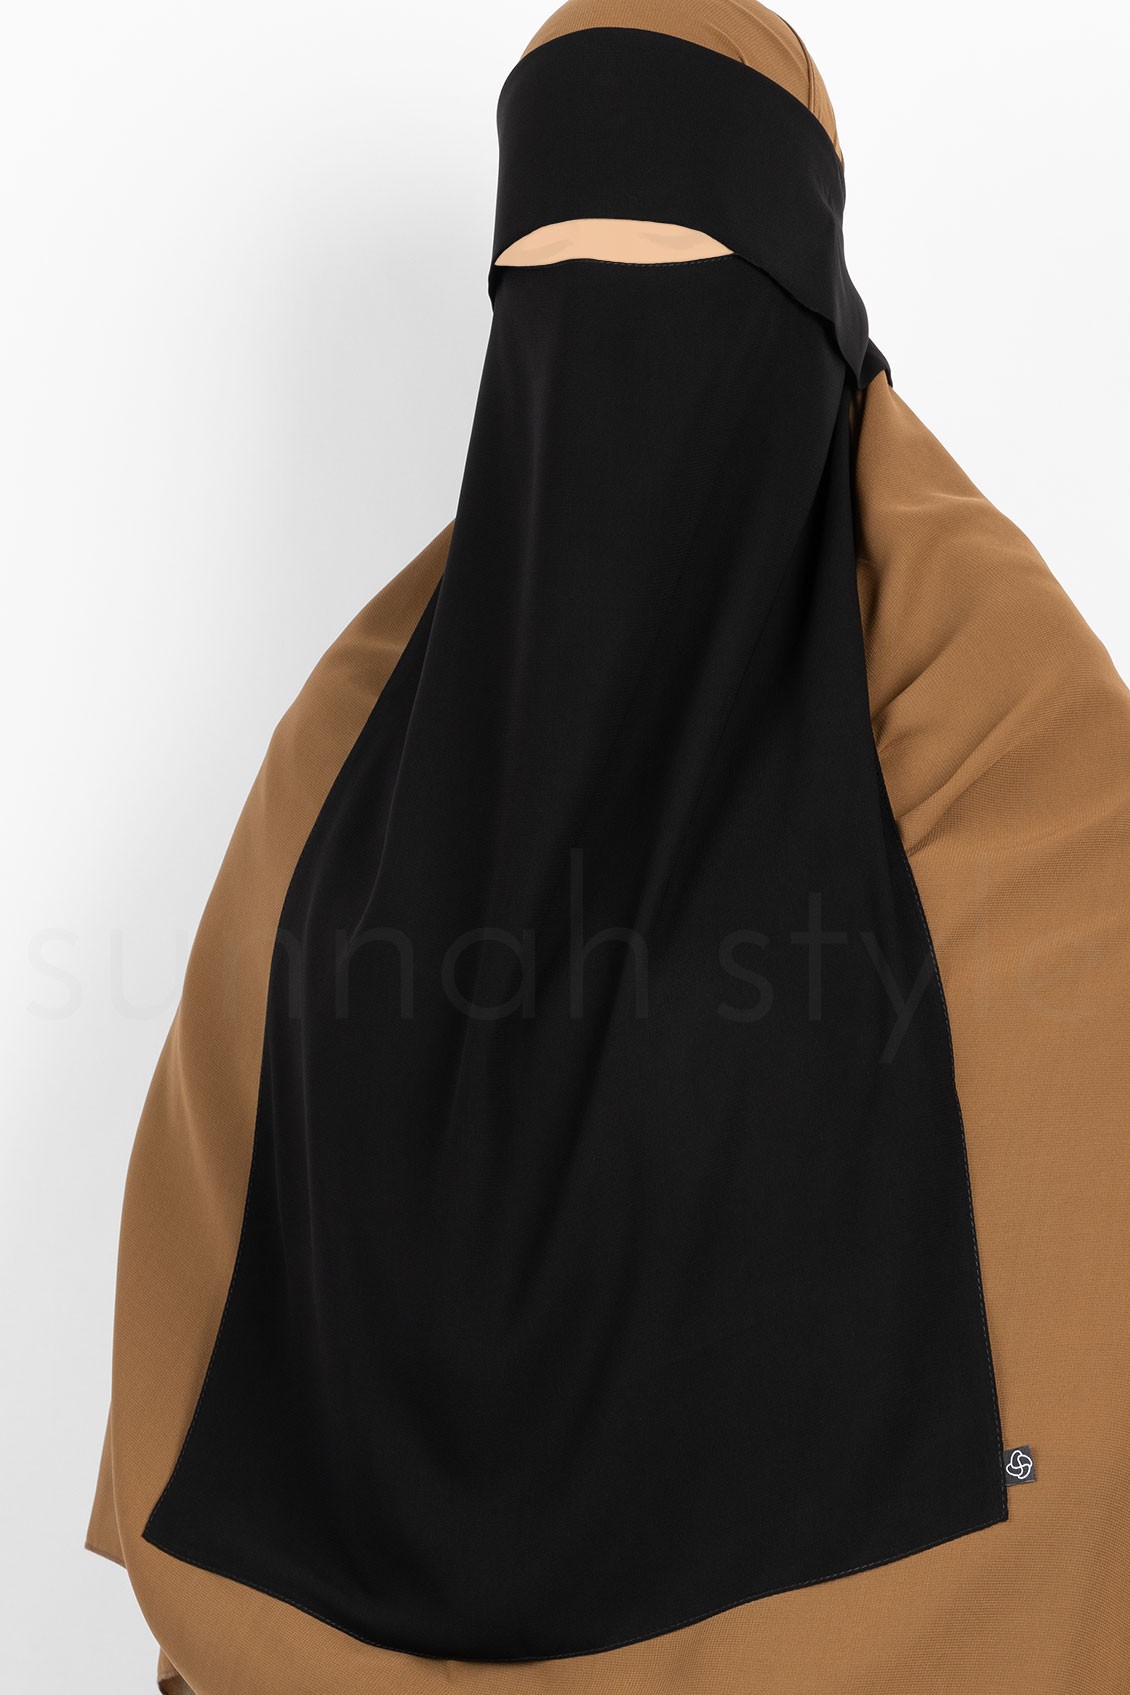 Sunnah Style Long One Layer Flap Niqab Black